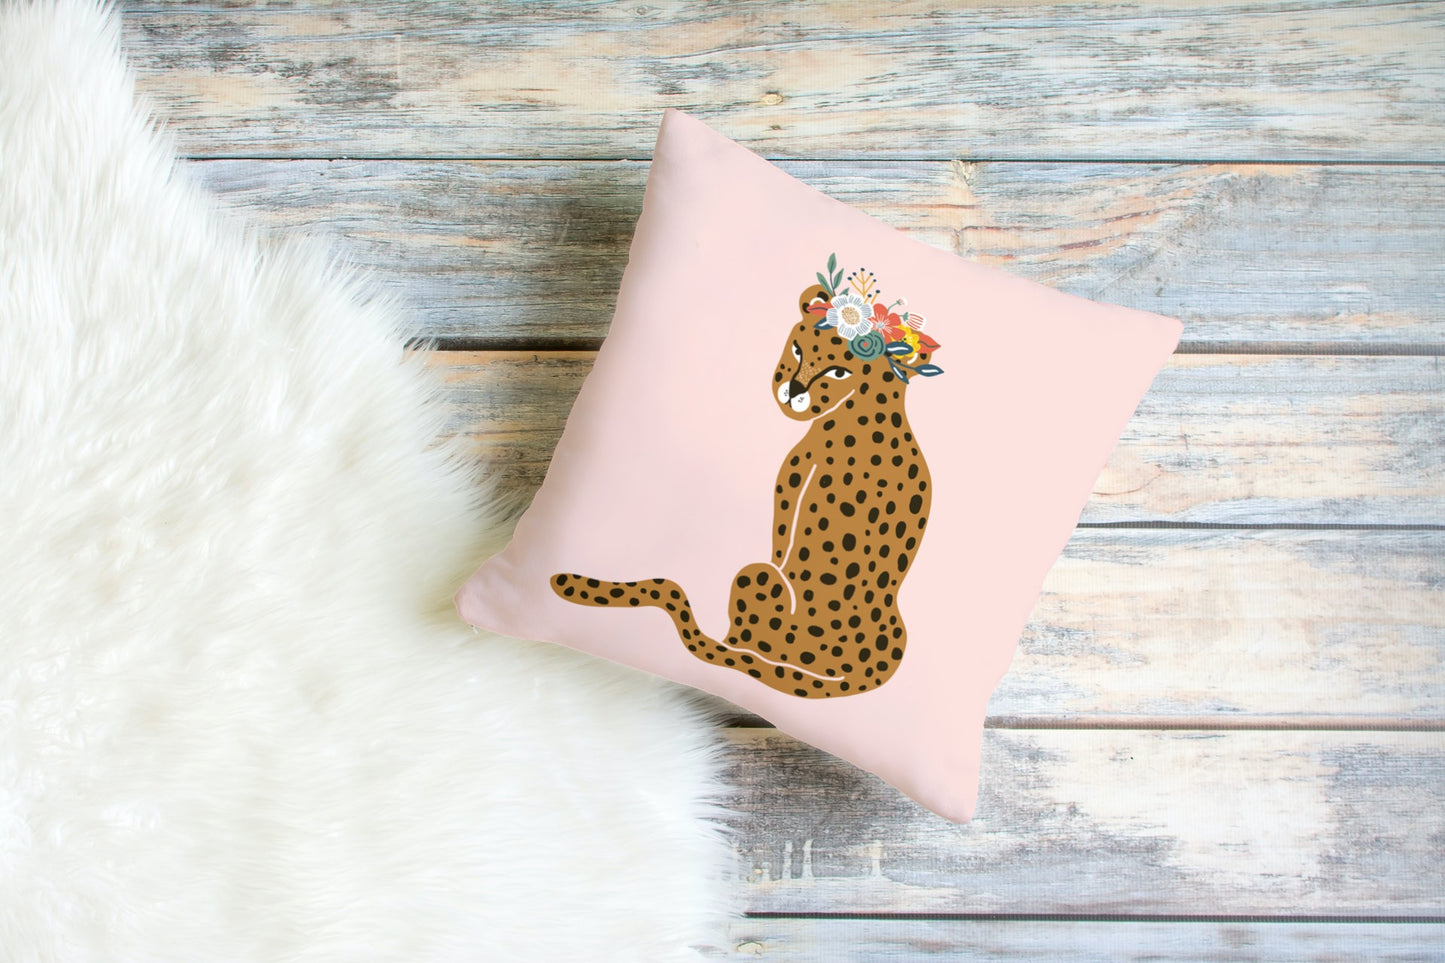 Amur Outdoor Pillows Floral Leopard